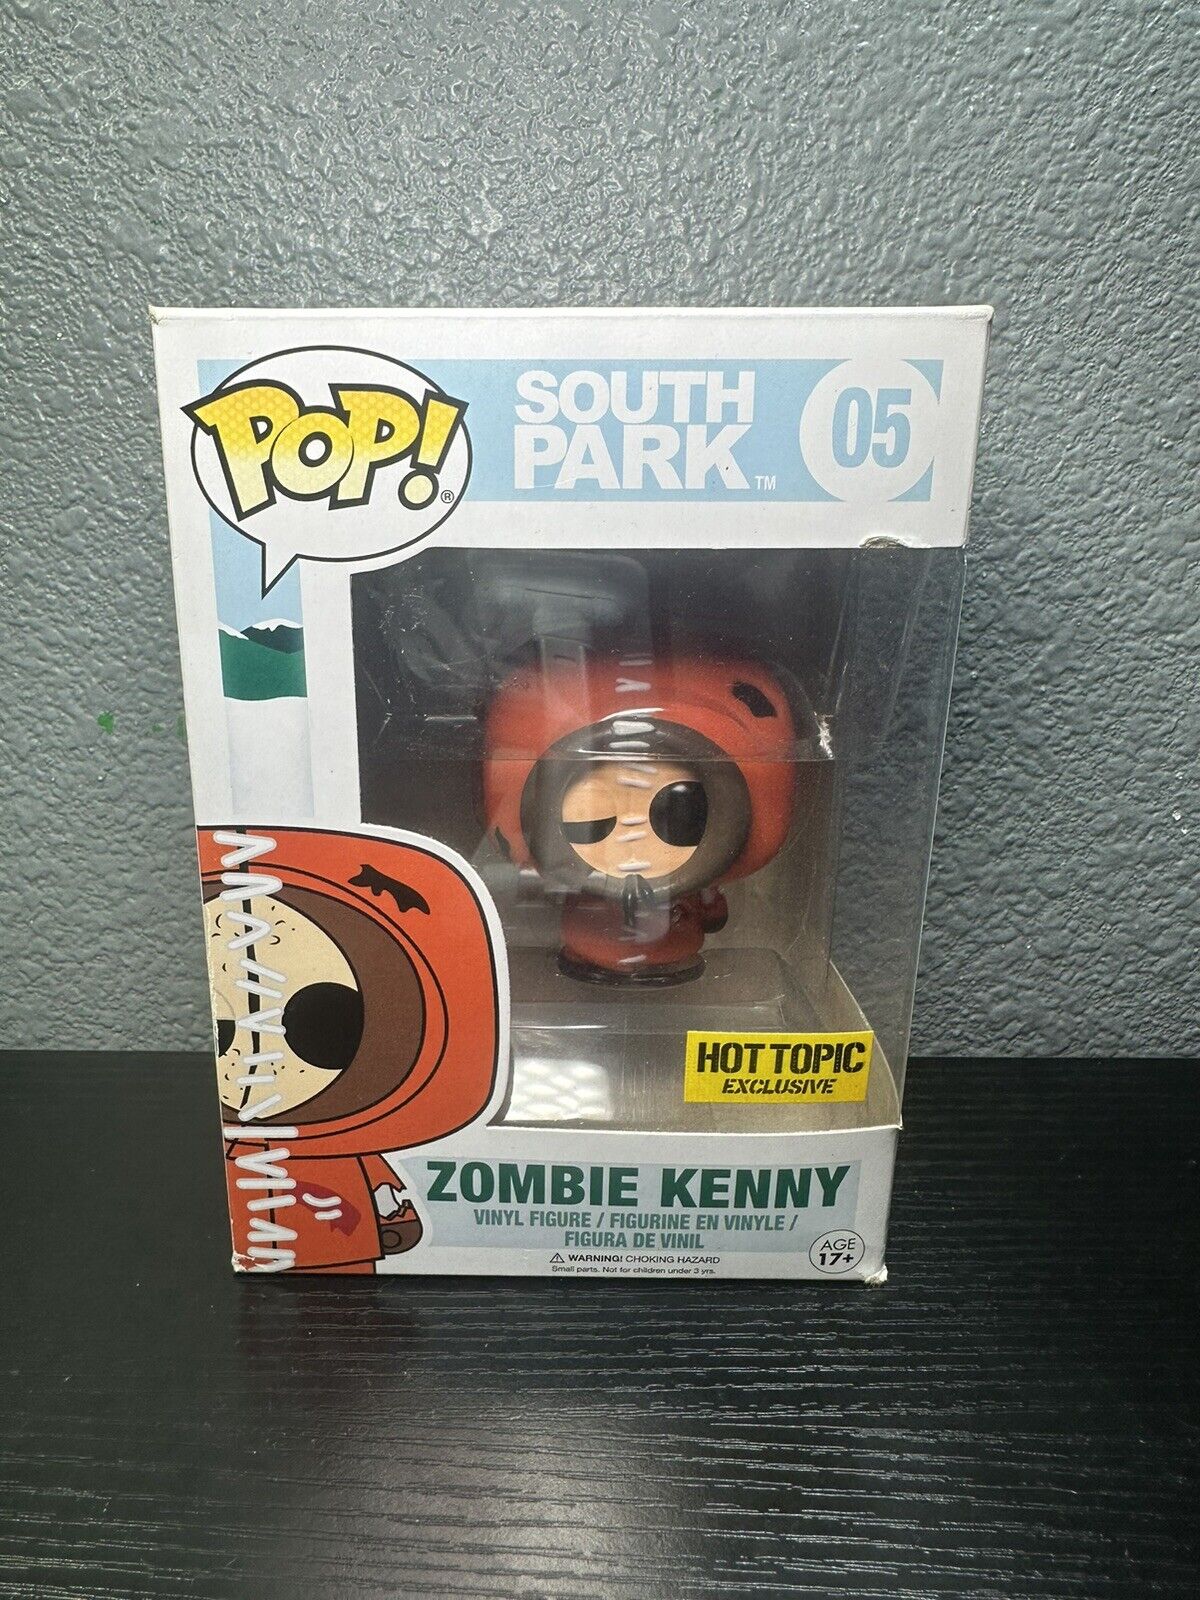 Funko Pop South Park #05 Zombie Kenny Hot Topic Exclusive Vinyl Figure